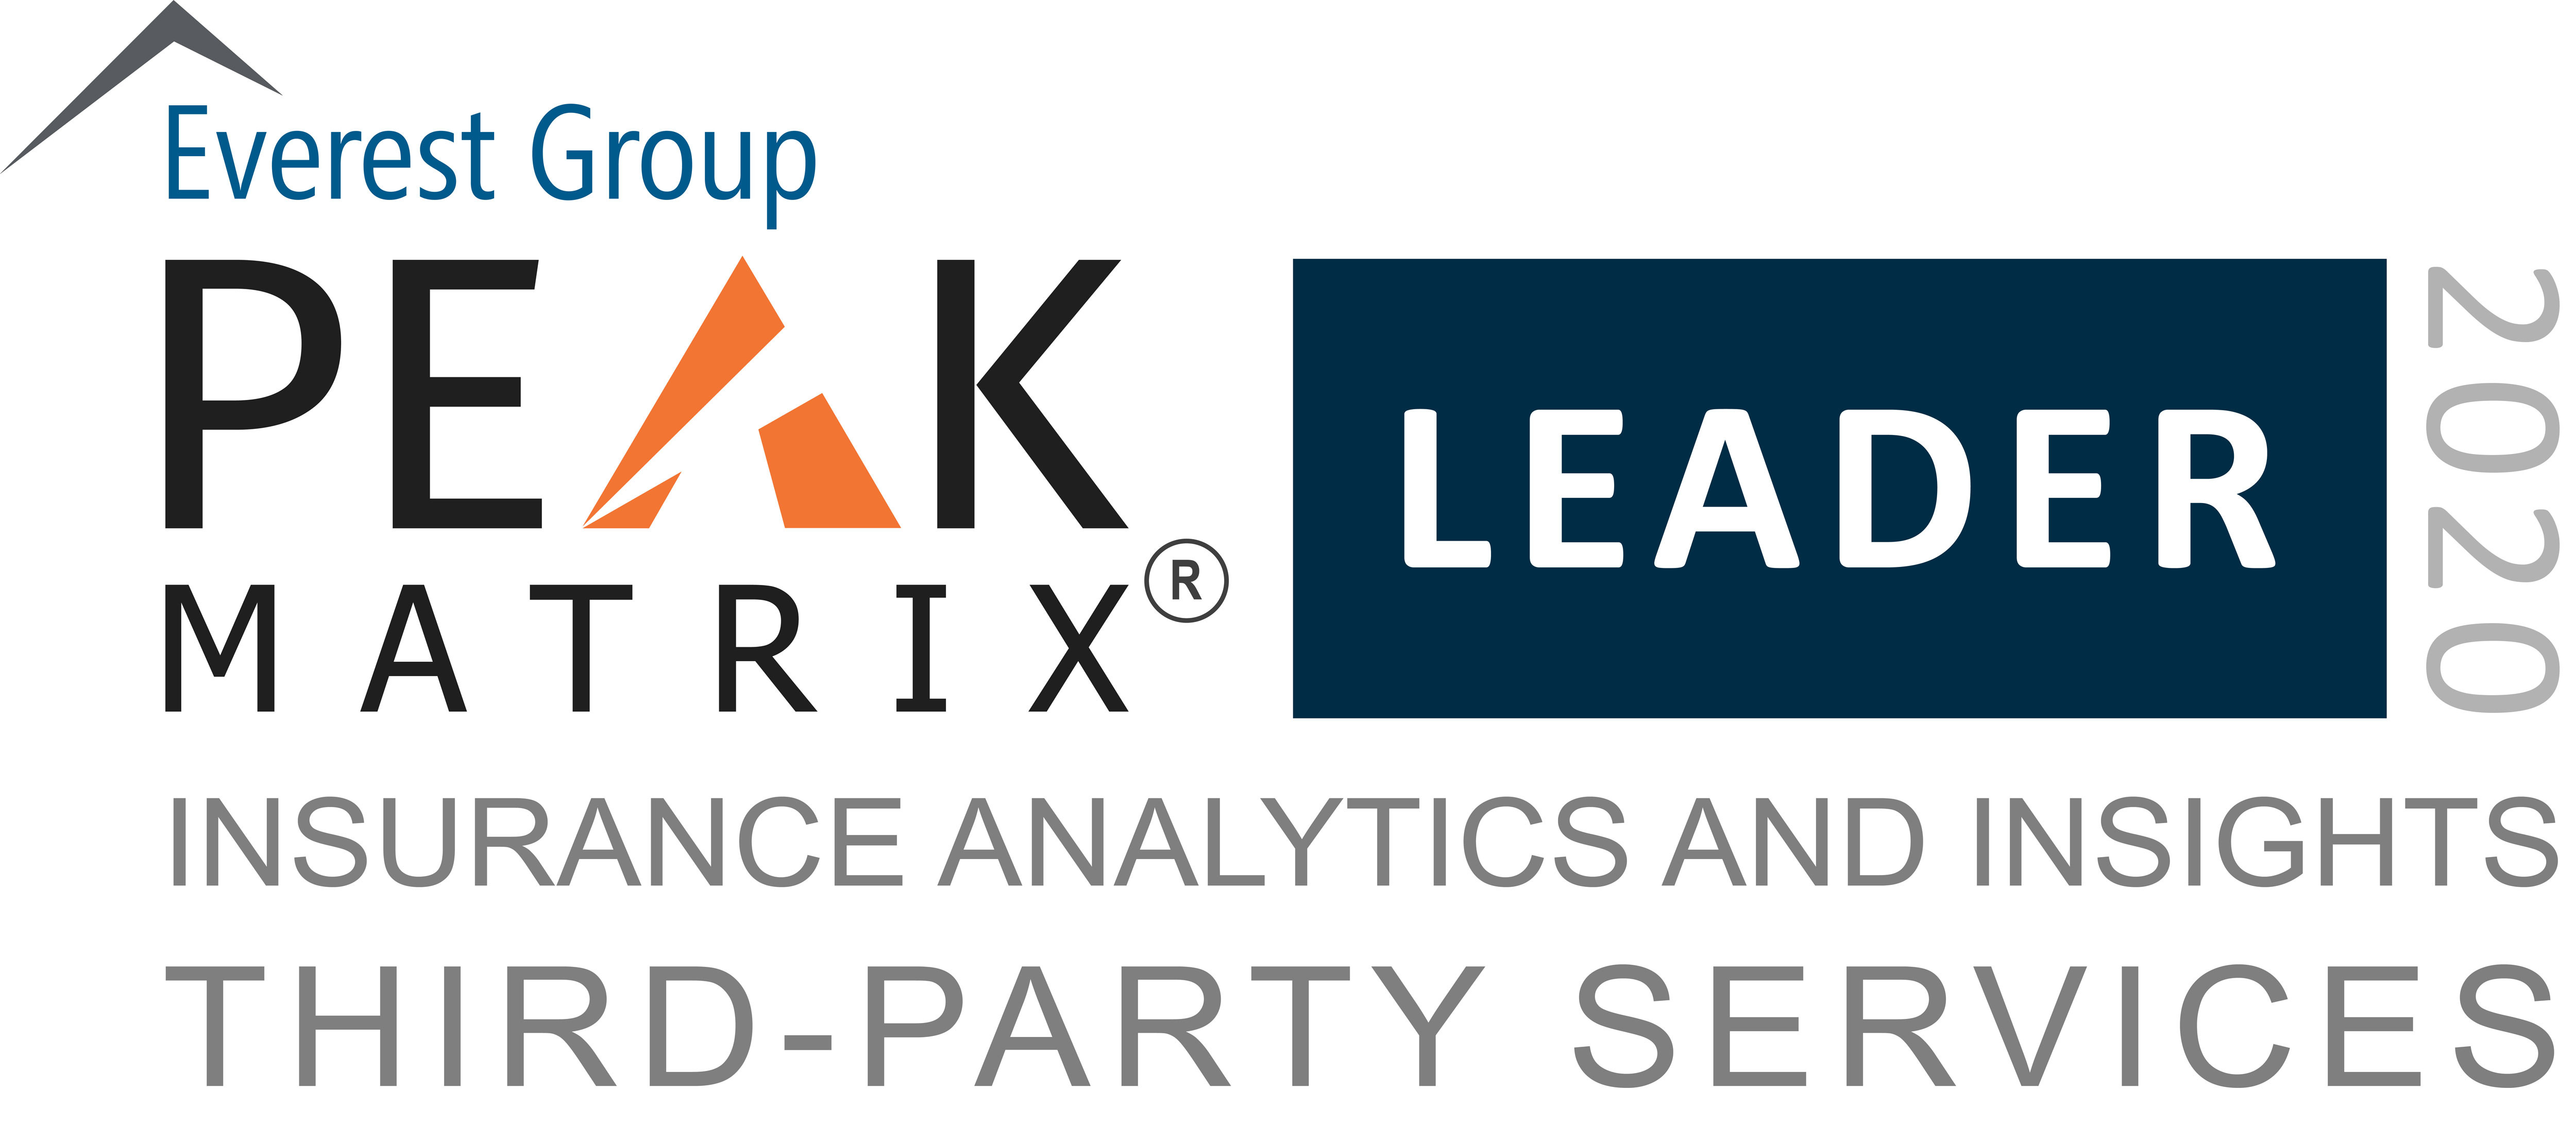 Everest Group peak matrise insurance analytics and insights logo